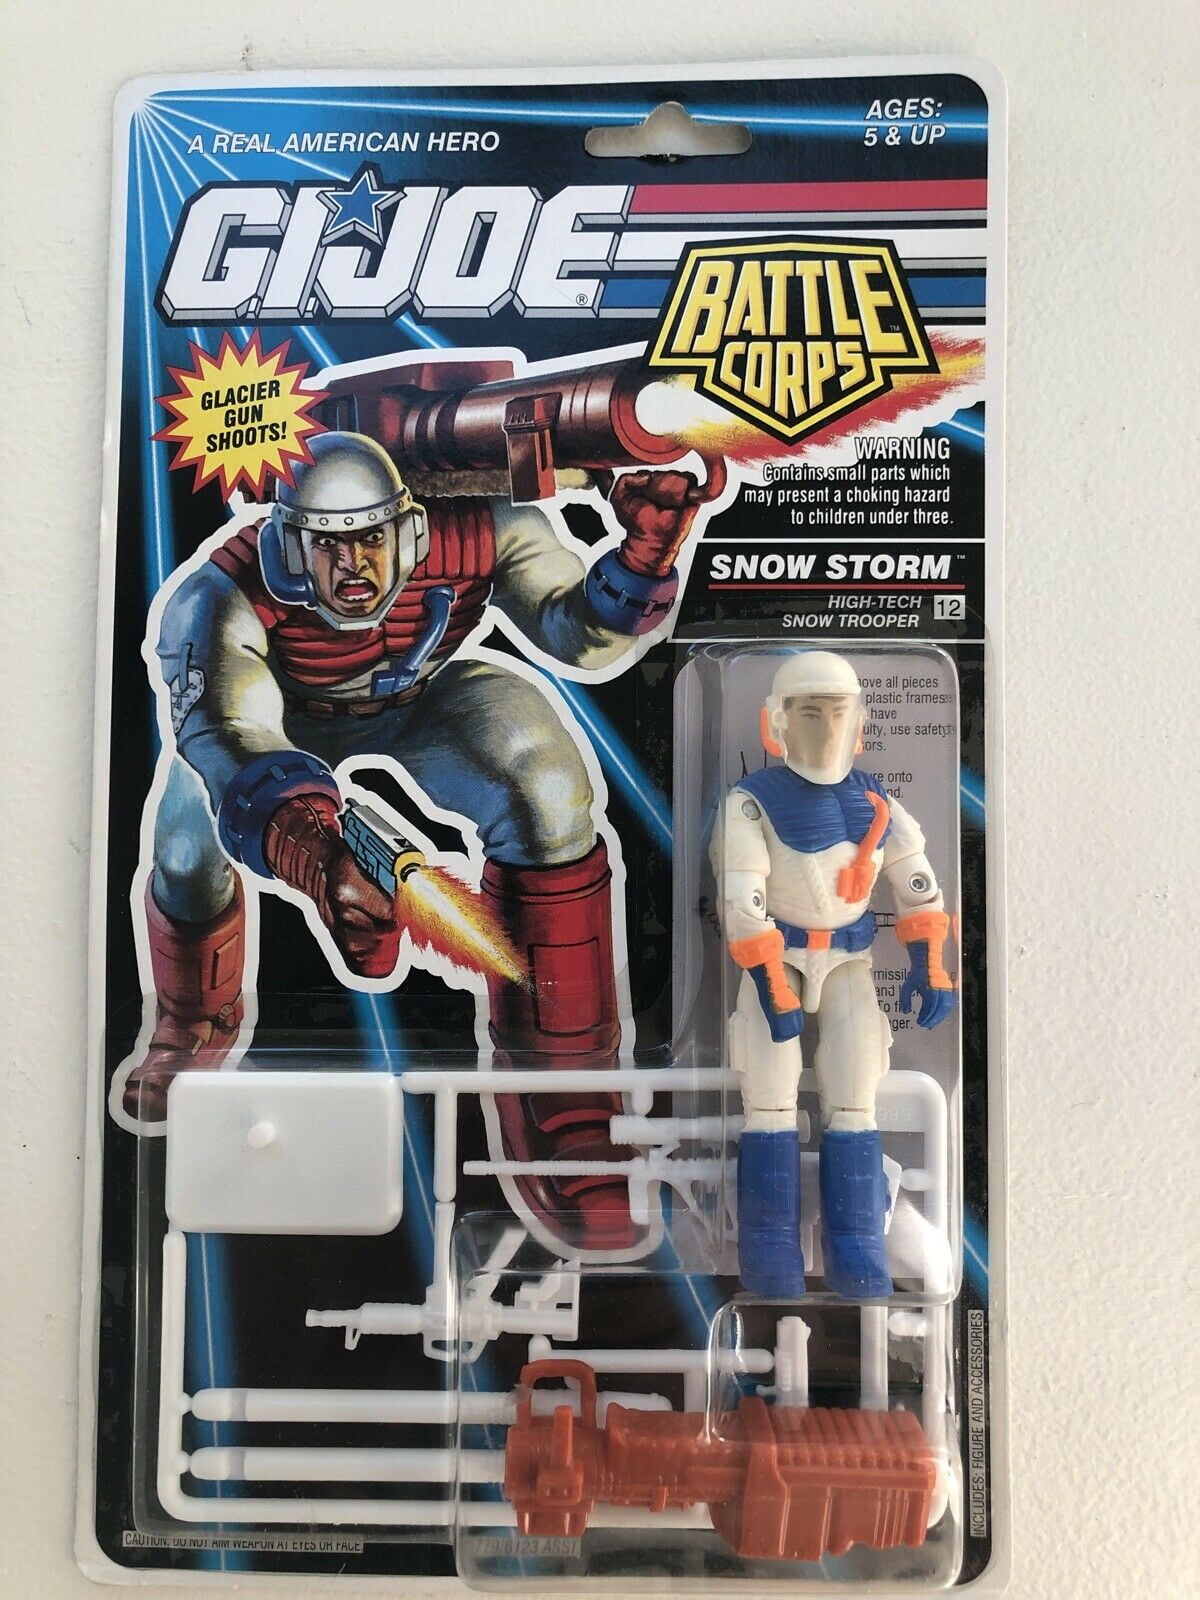 1993 Vintage Hasbro GI Joe Battle Corps SNOW STORM Action Figure MOC !